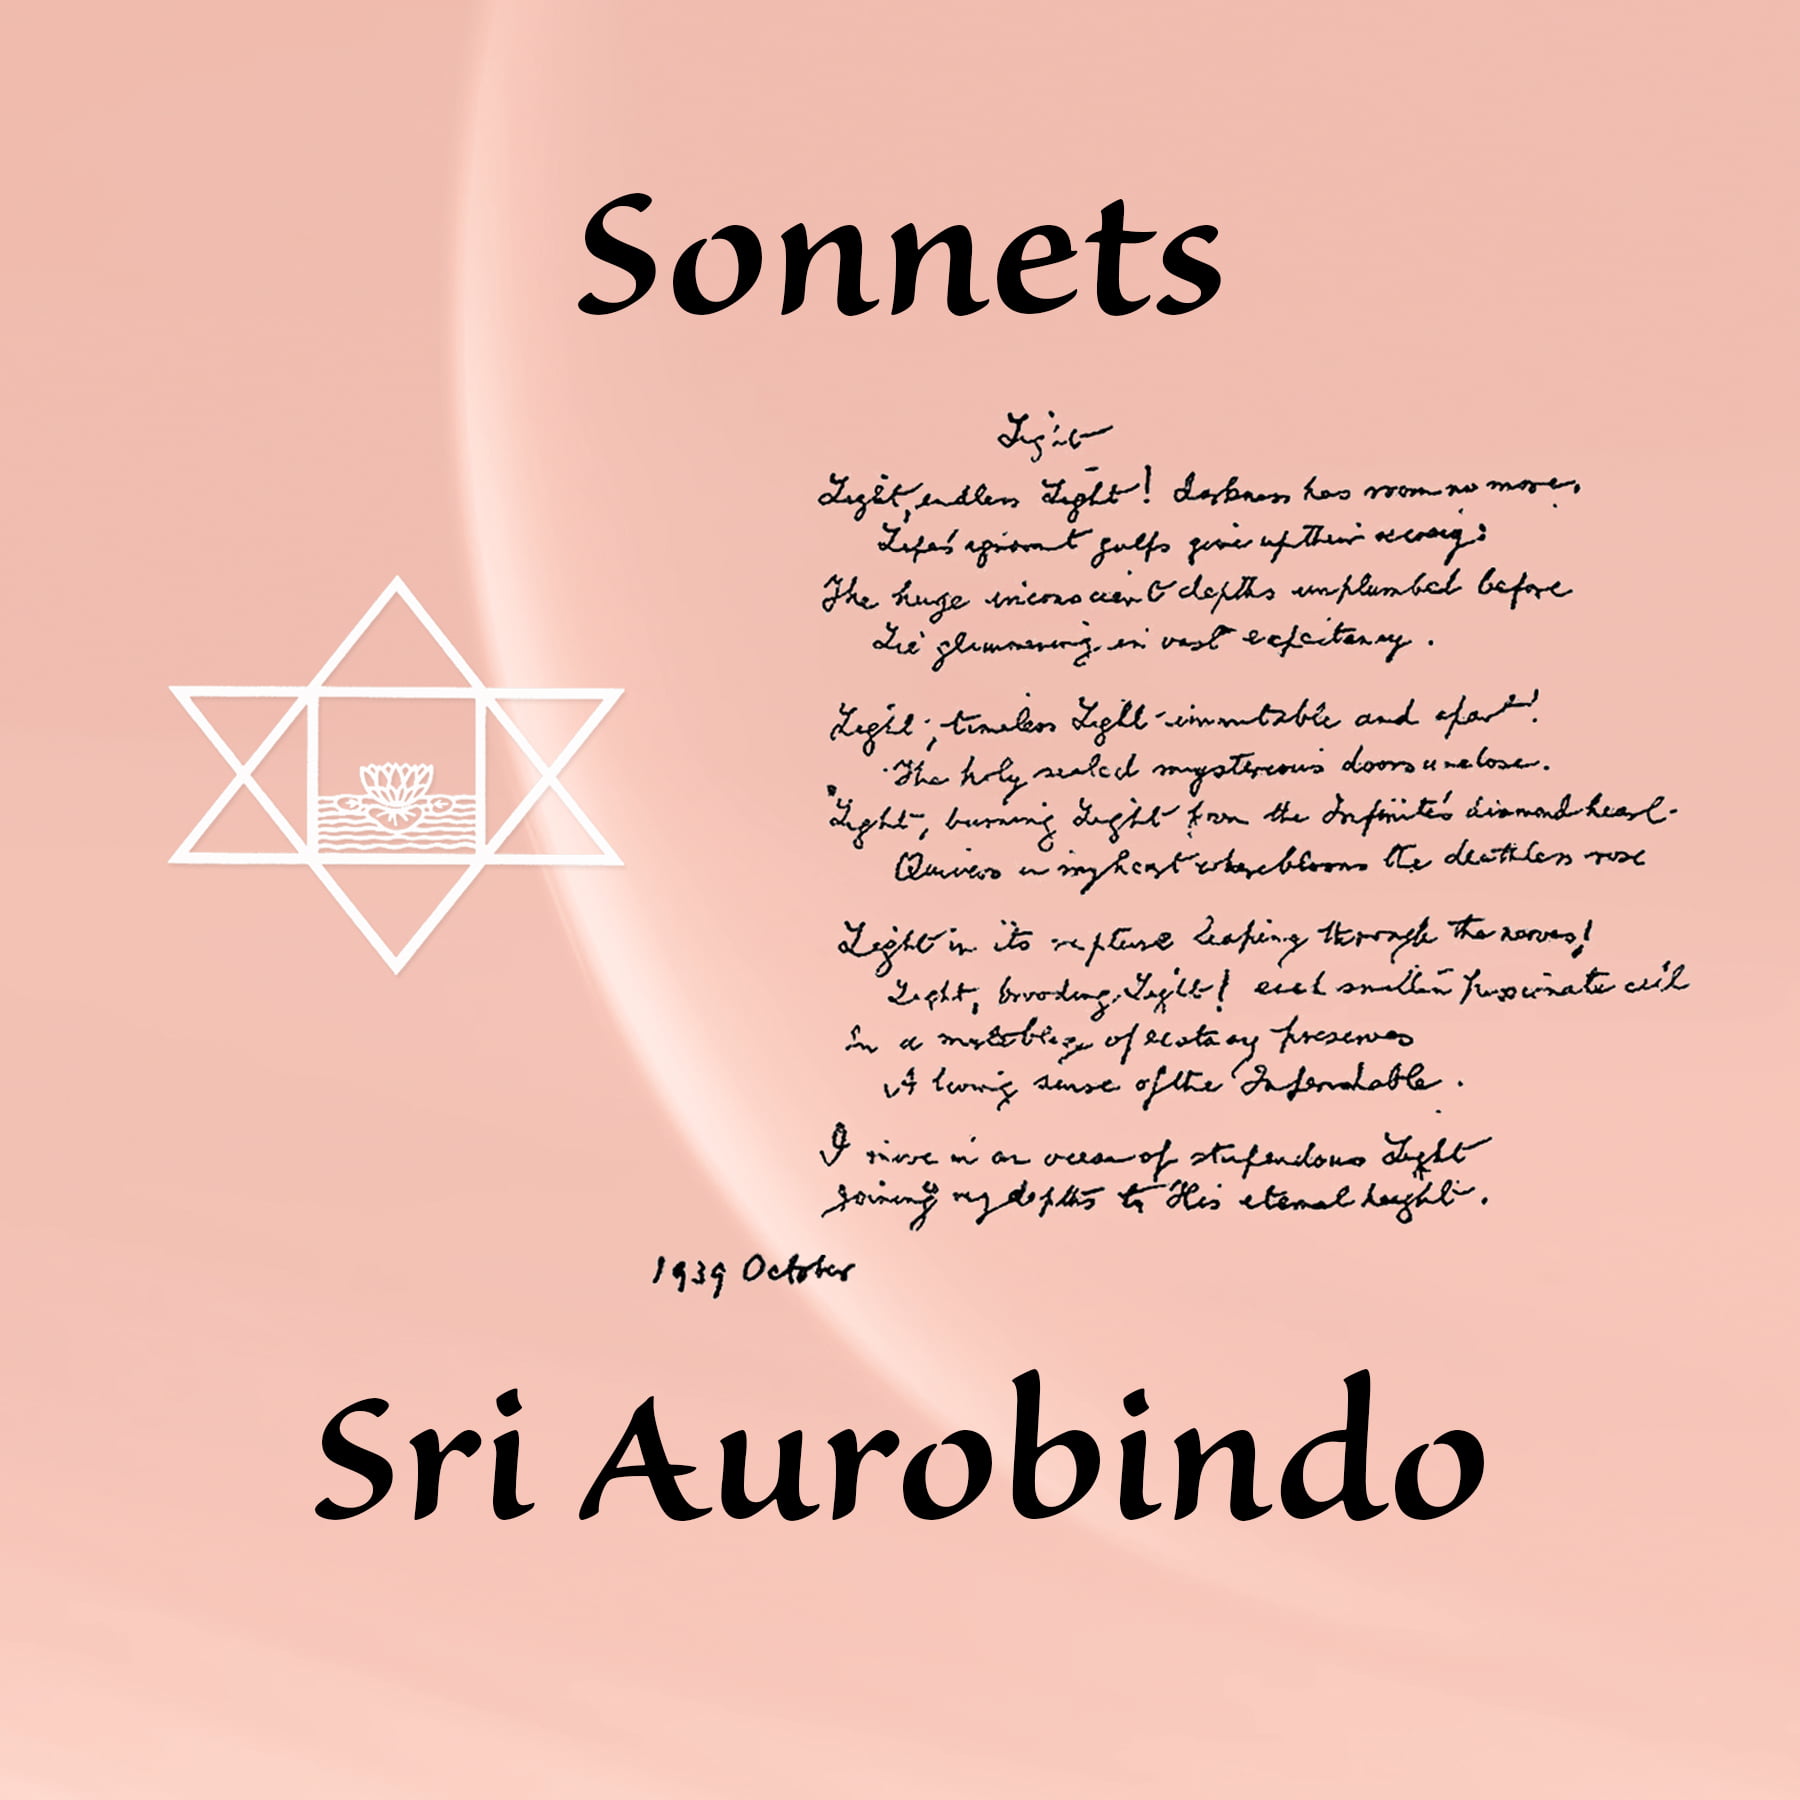 Letters on Yoga I (CWSA) - Book by Sri Aurobindo : Read online